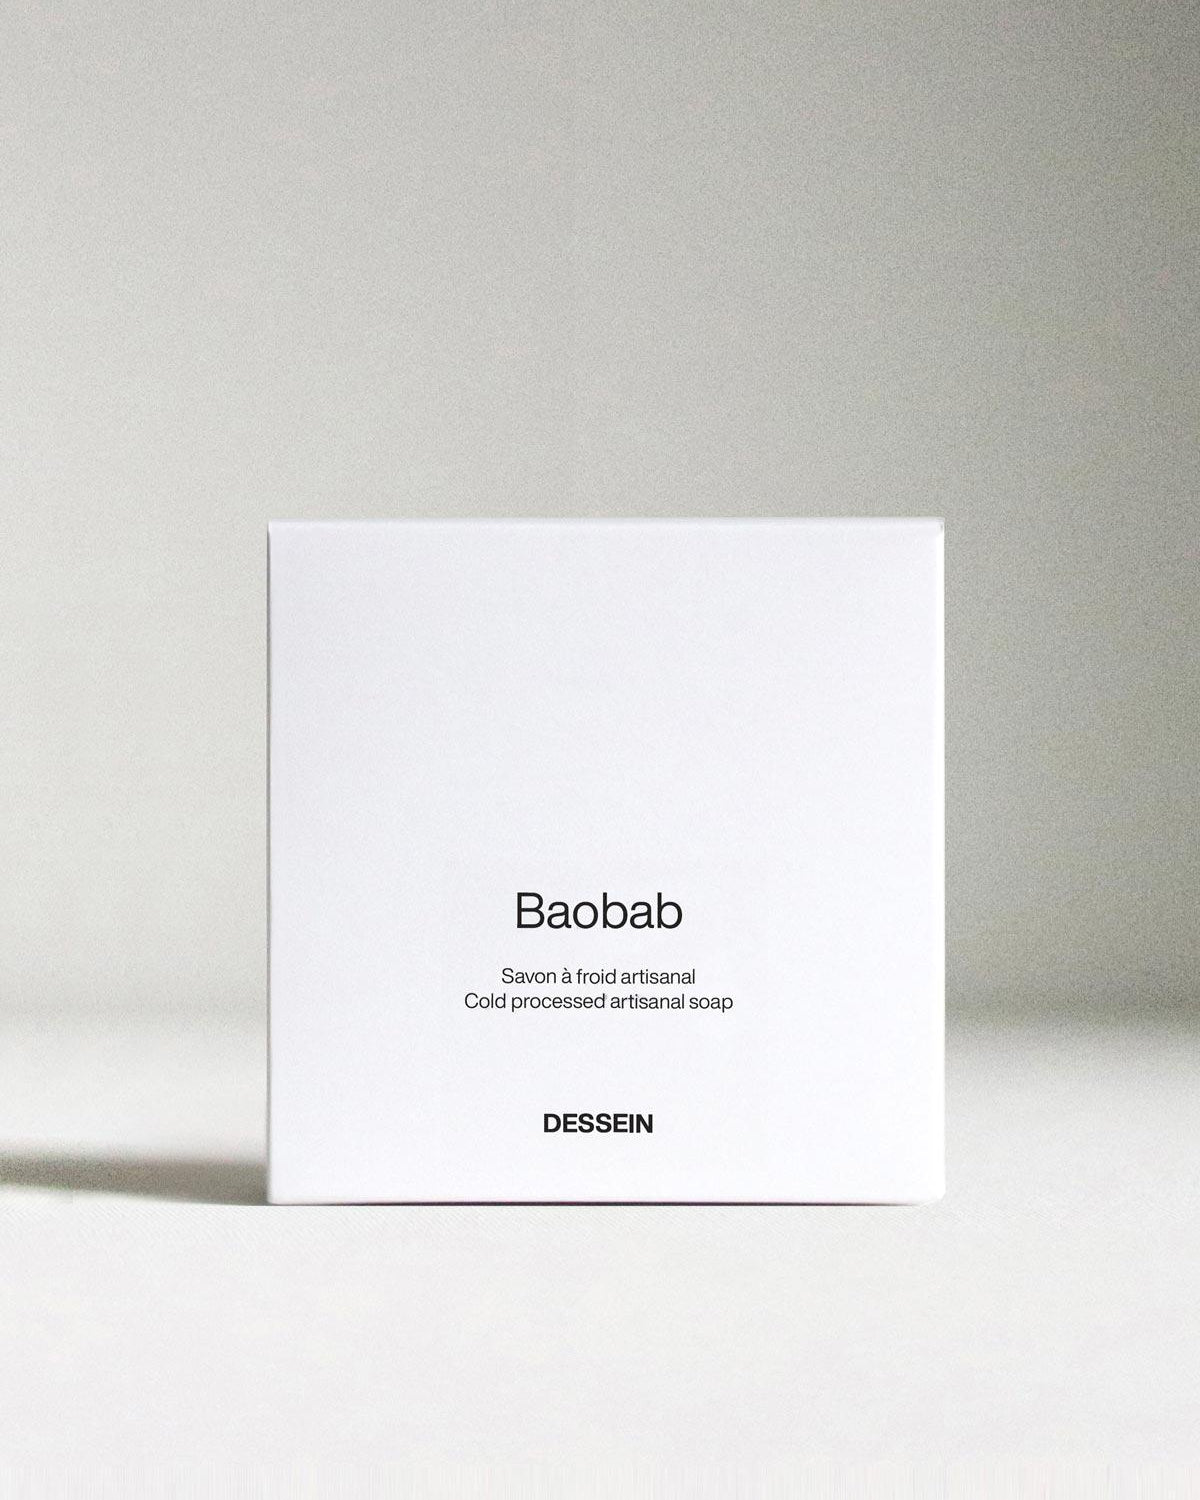 Baobab - Beauty - Dessein - Elevastor